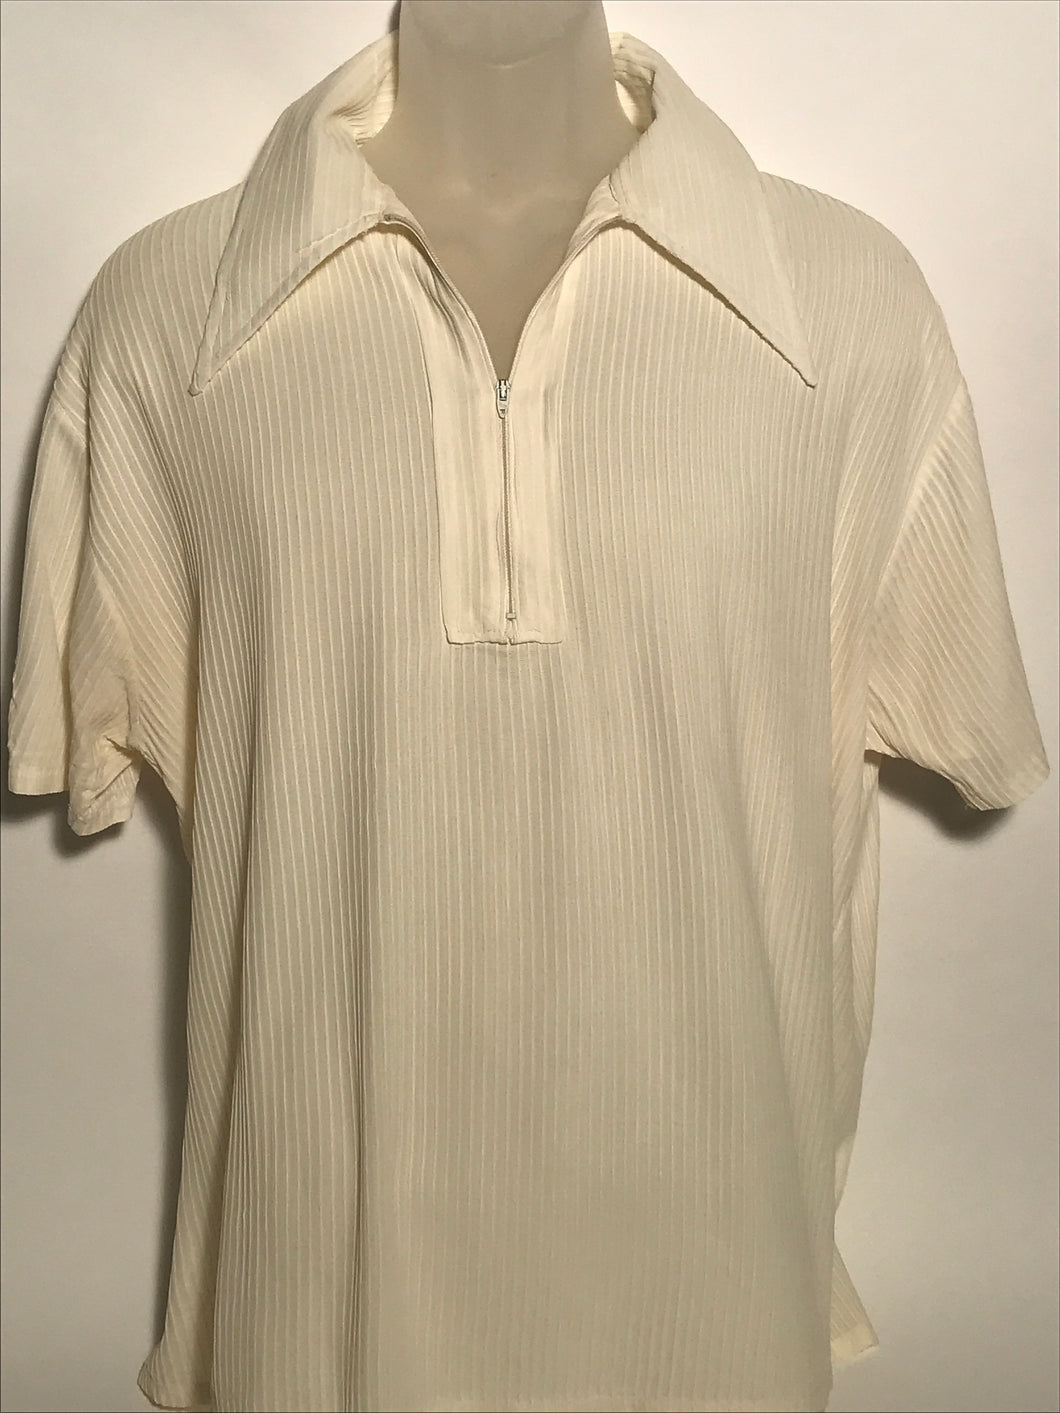 Vintage 1970s Short Sleeve Men's Shirt Size Extra Large RENTAL XL926